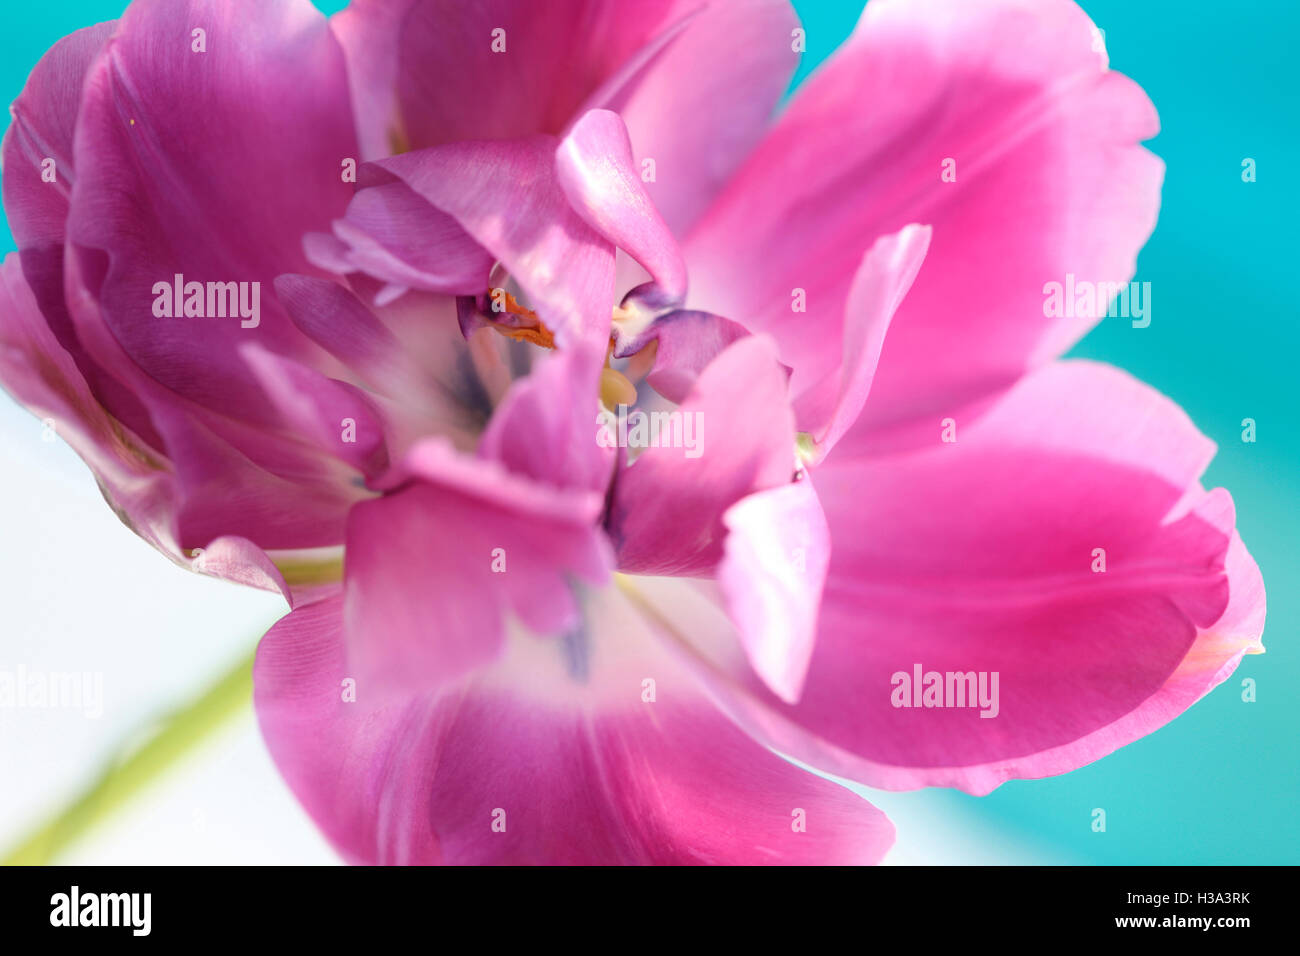 emerging pink parrot tulip - new life Jane Ann Butler Photography JABP1634 Stock Photo